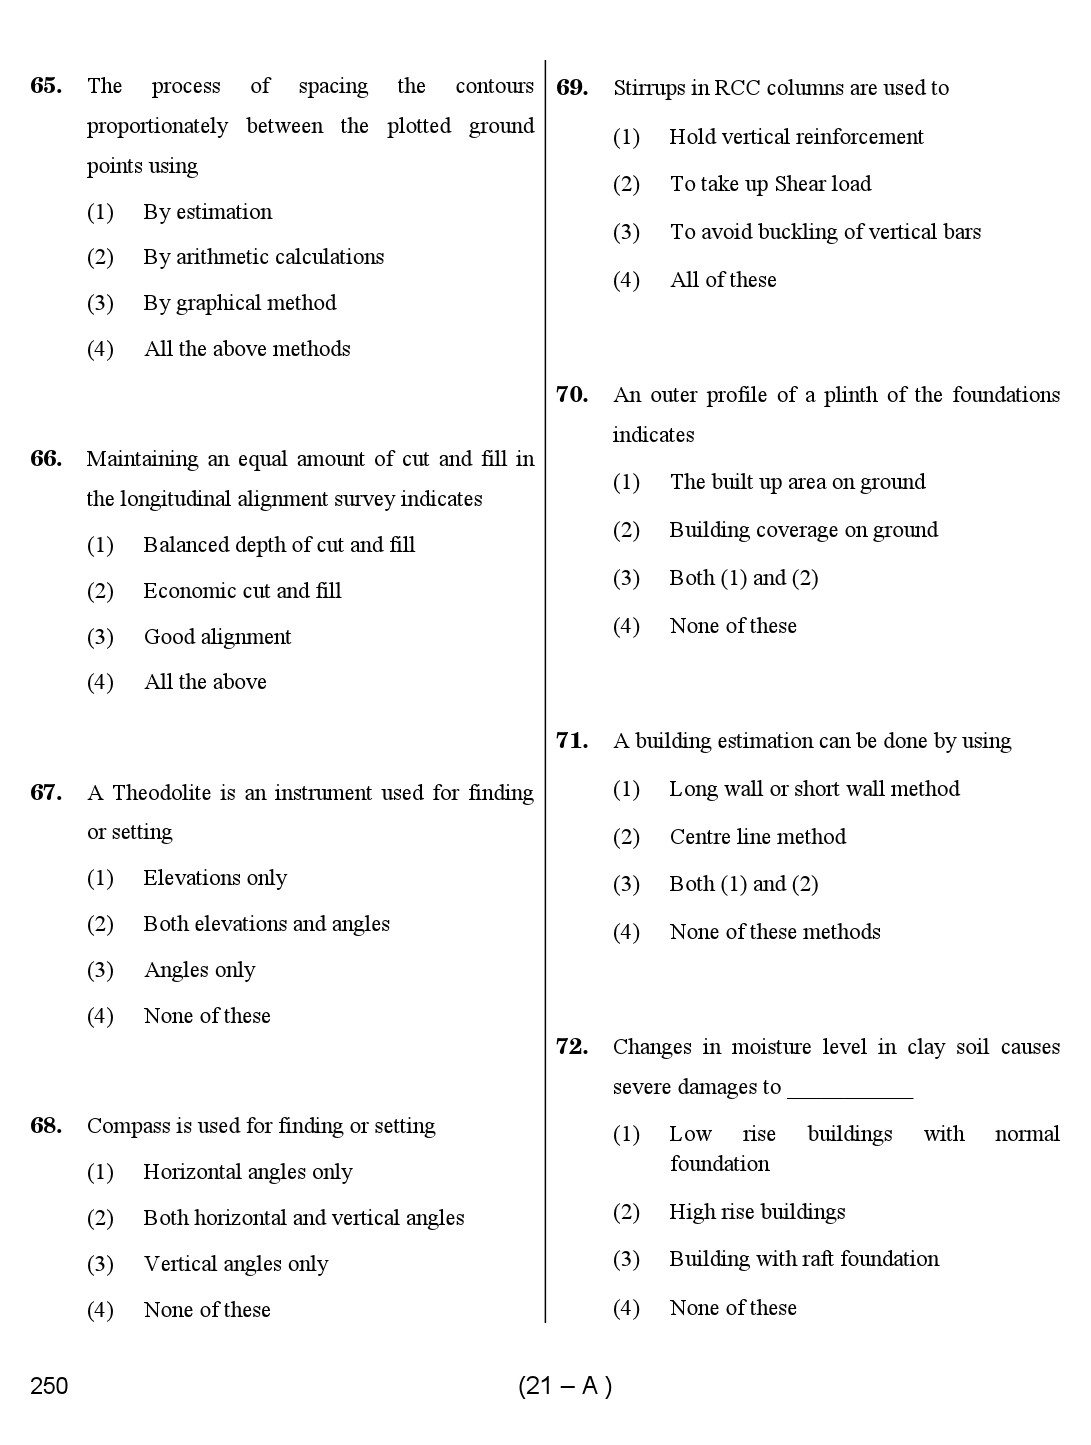 Karnataka PSC Draughtsman Exam Sample Question Paper 21